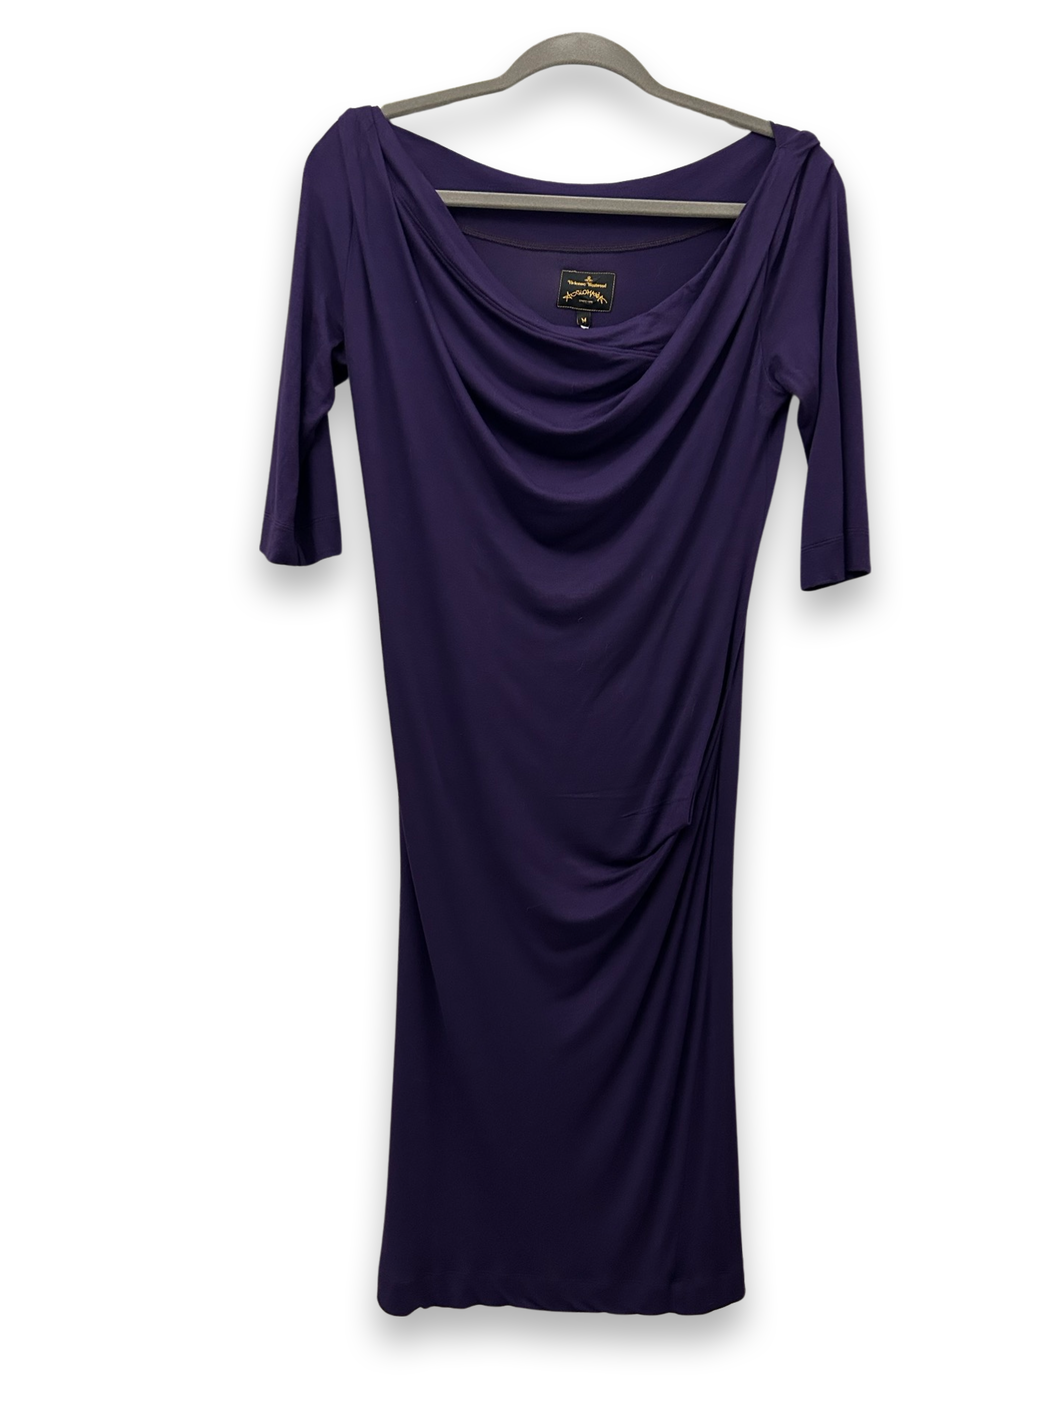 Vivienne Westwood Anglomania Purple Jersey Cowl Short Sleeved Dress Size Medium